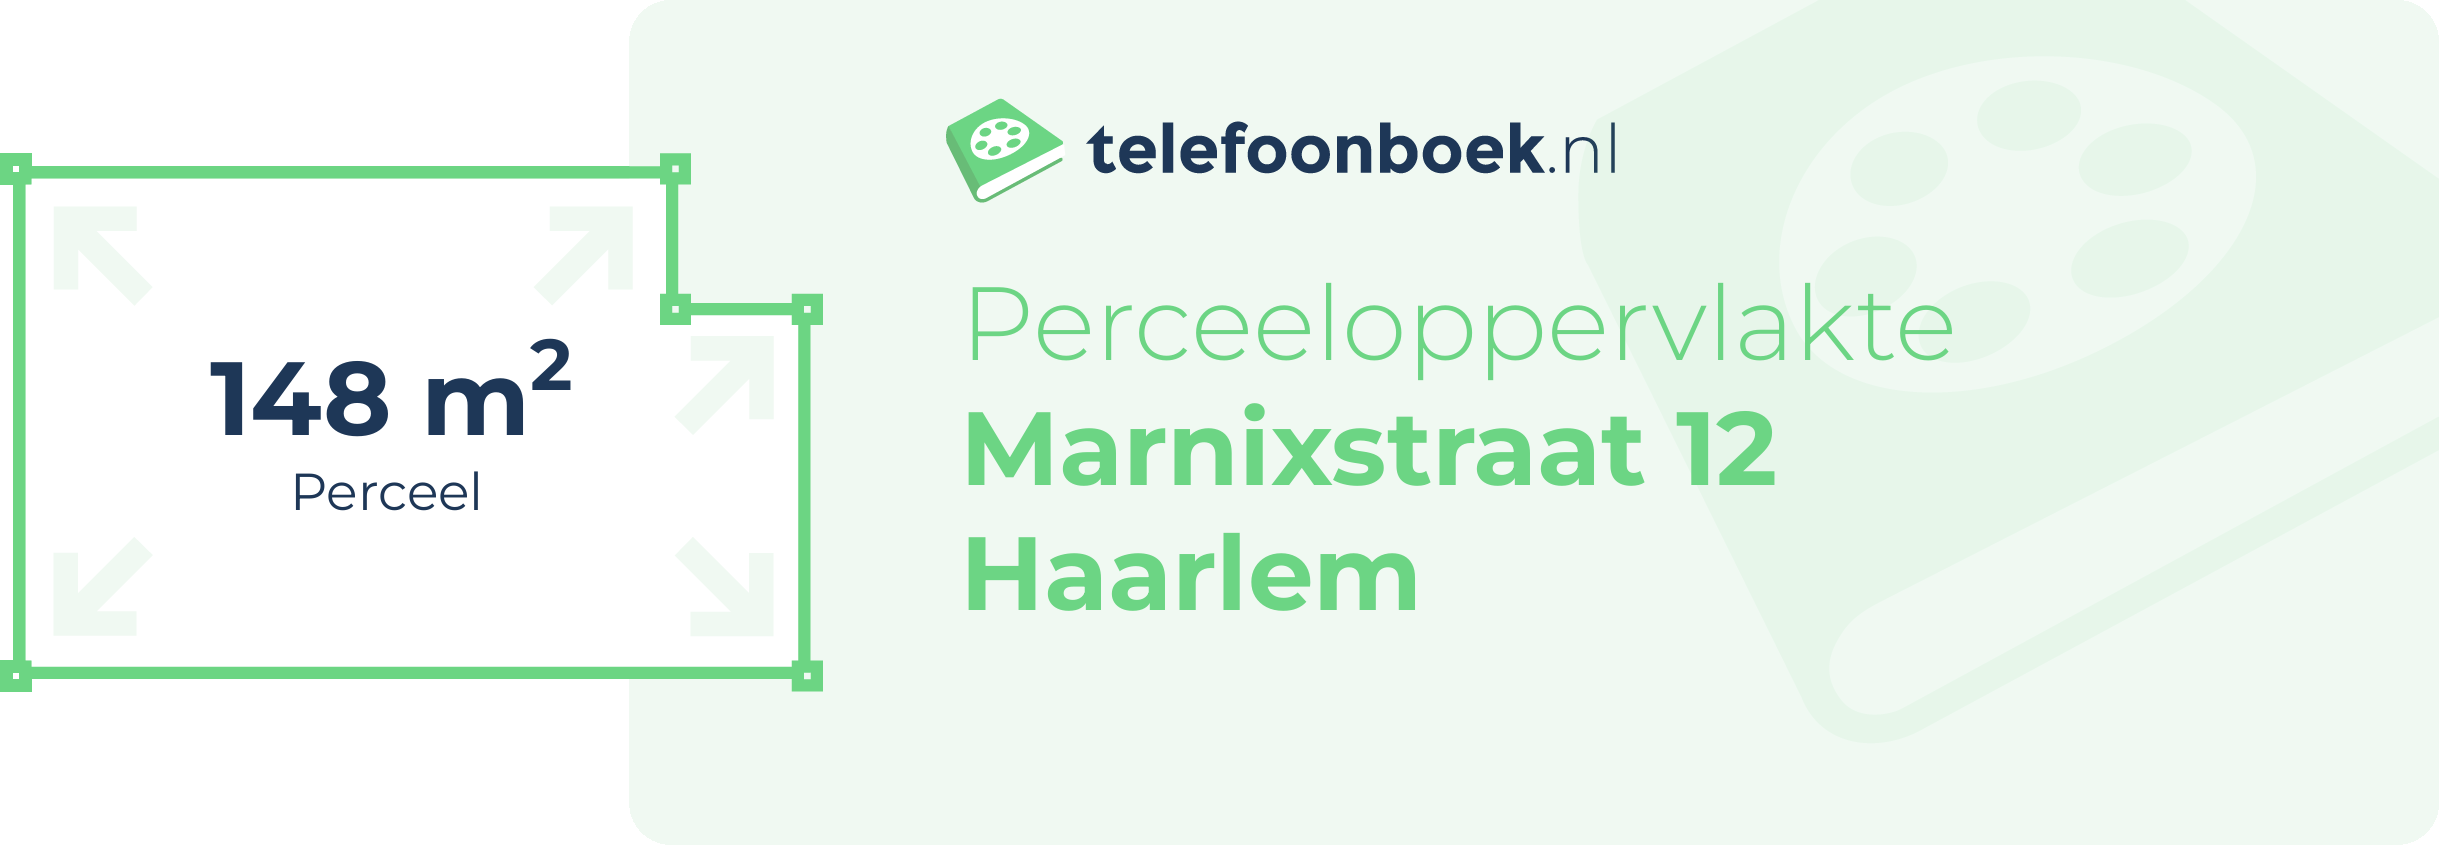 Perceeloppervlakte Marnixstraat 12 Haarlem